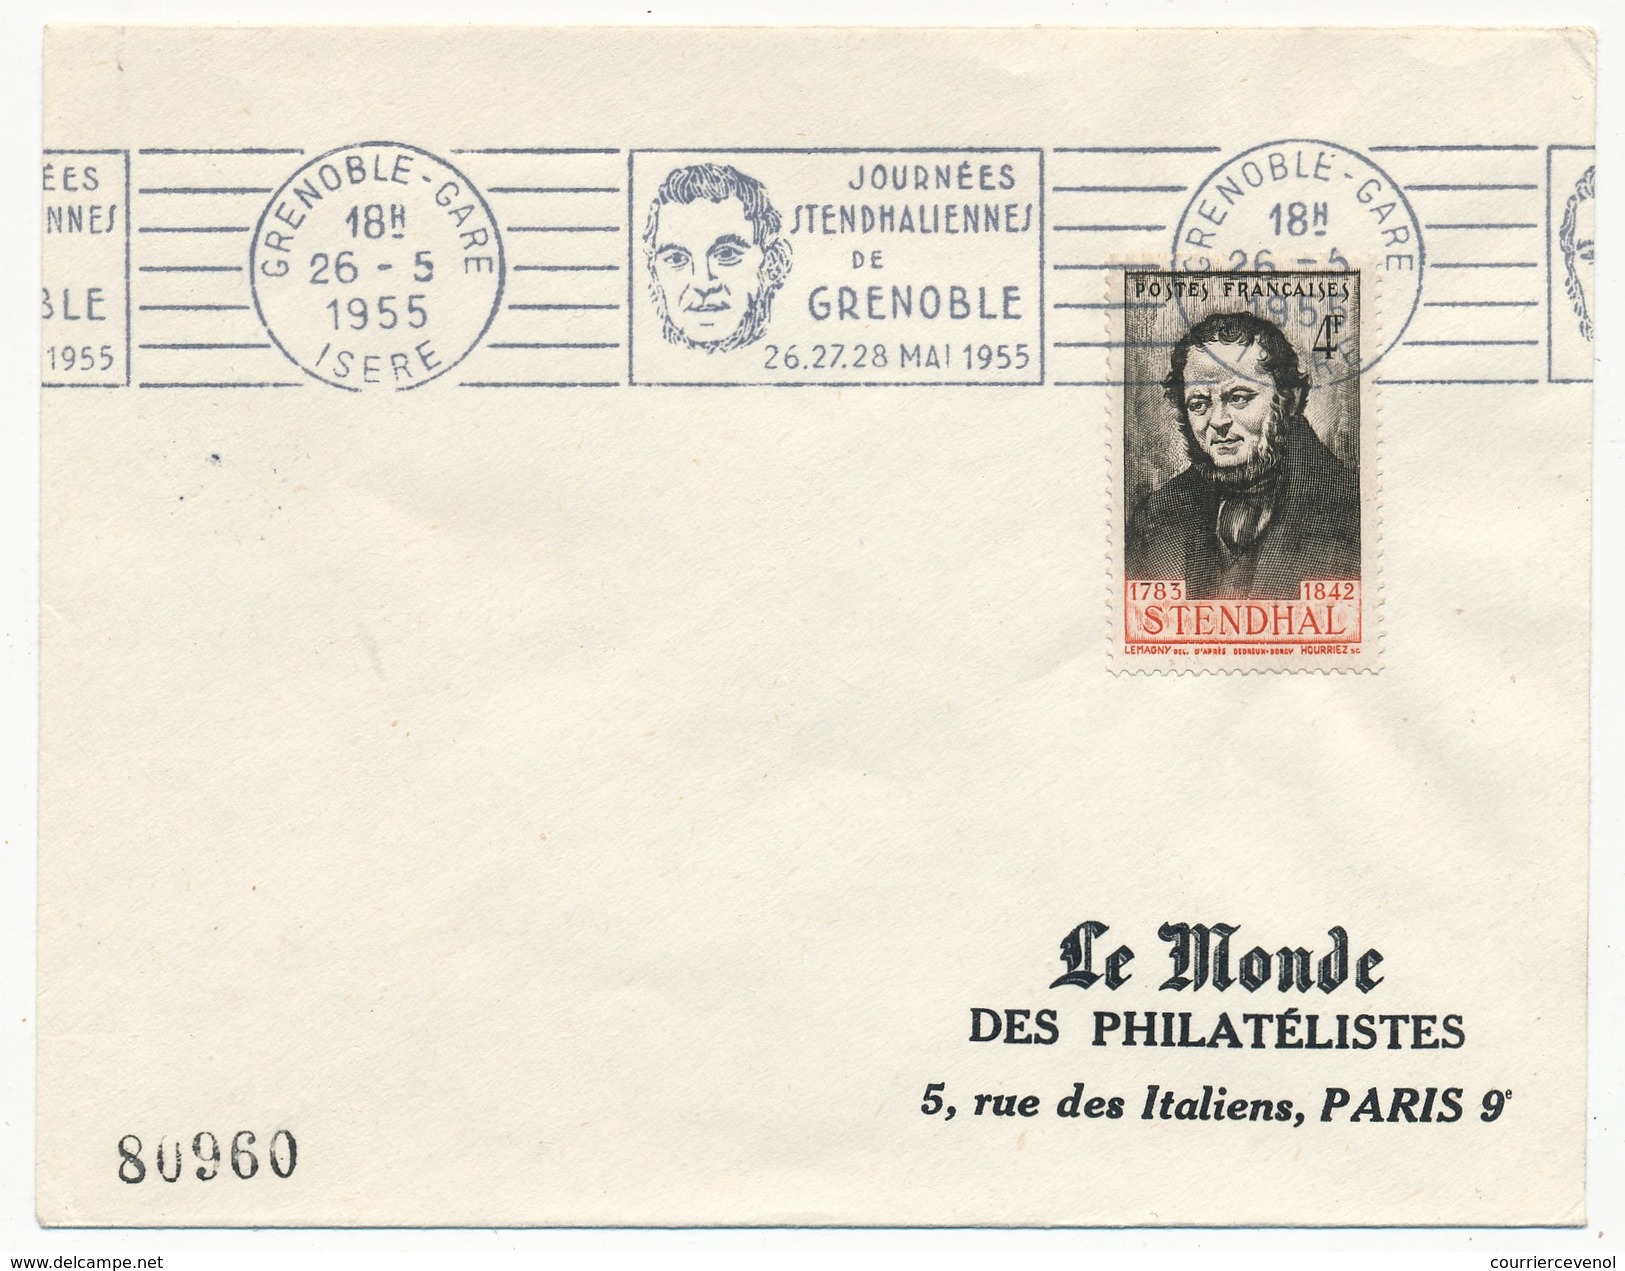 FRANCE - Enveloppe - OMEC "Journées Stendhaliennes" GRENOBLE 26 Mai 1955 - Ecrivains